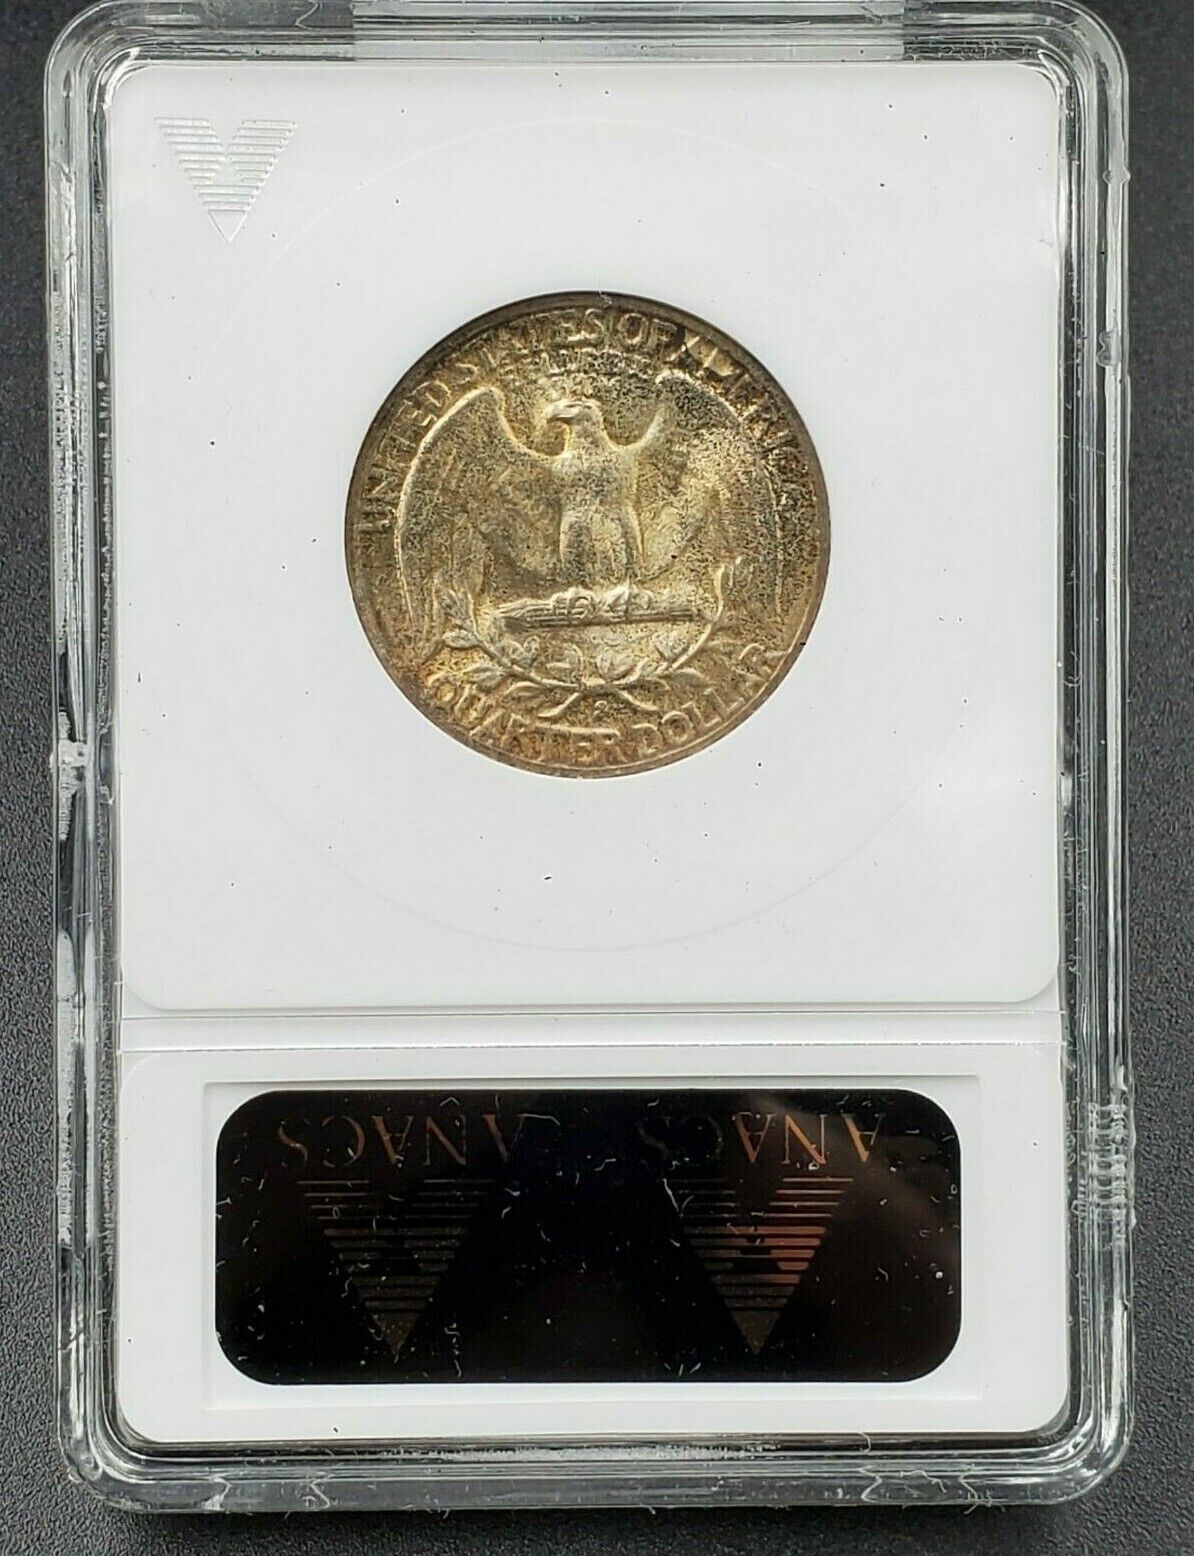 1953 S S/S 25c Washington Quarter Coin Variety MS65 RPM 001 ANACS Neat Toning